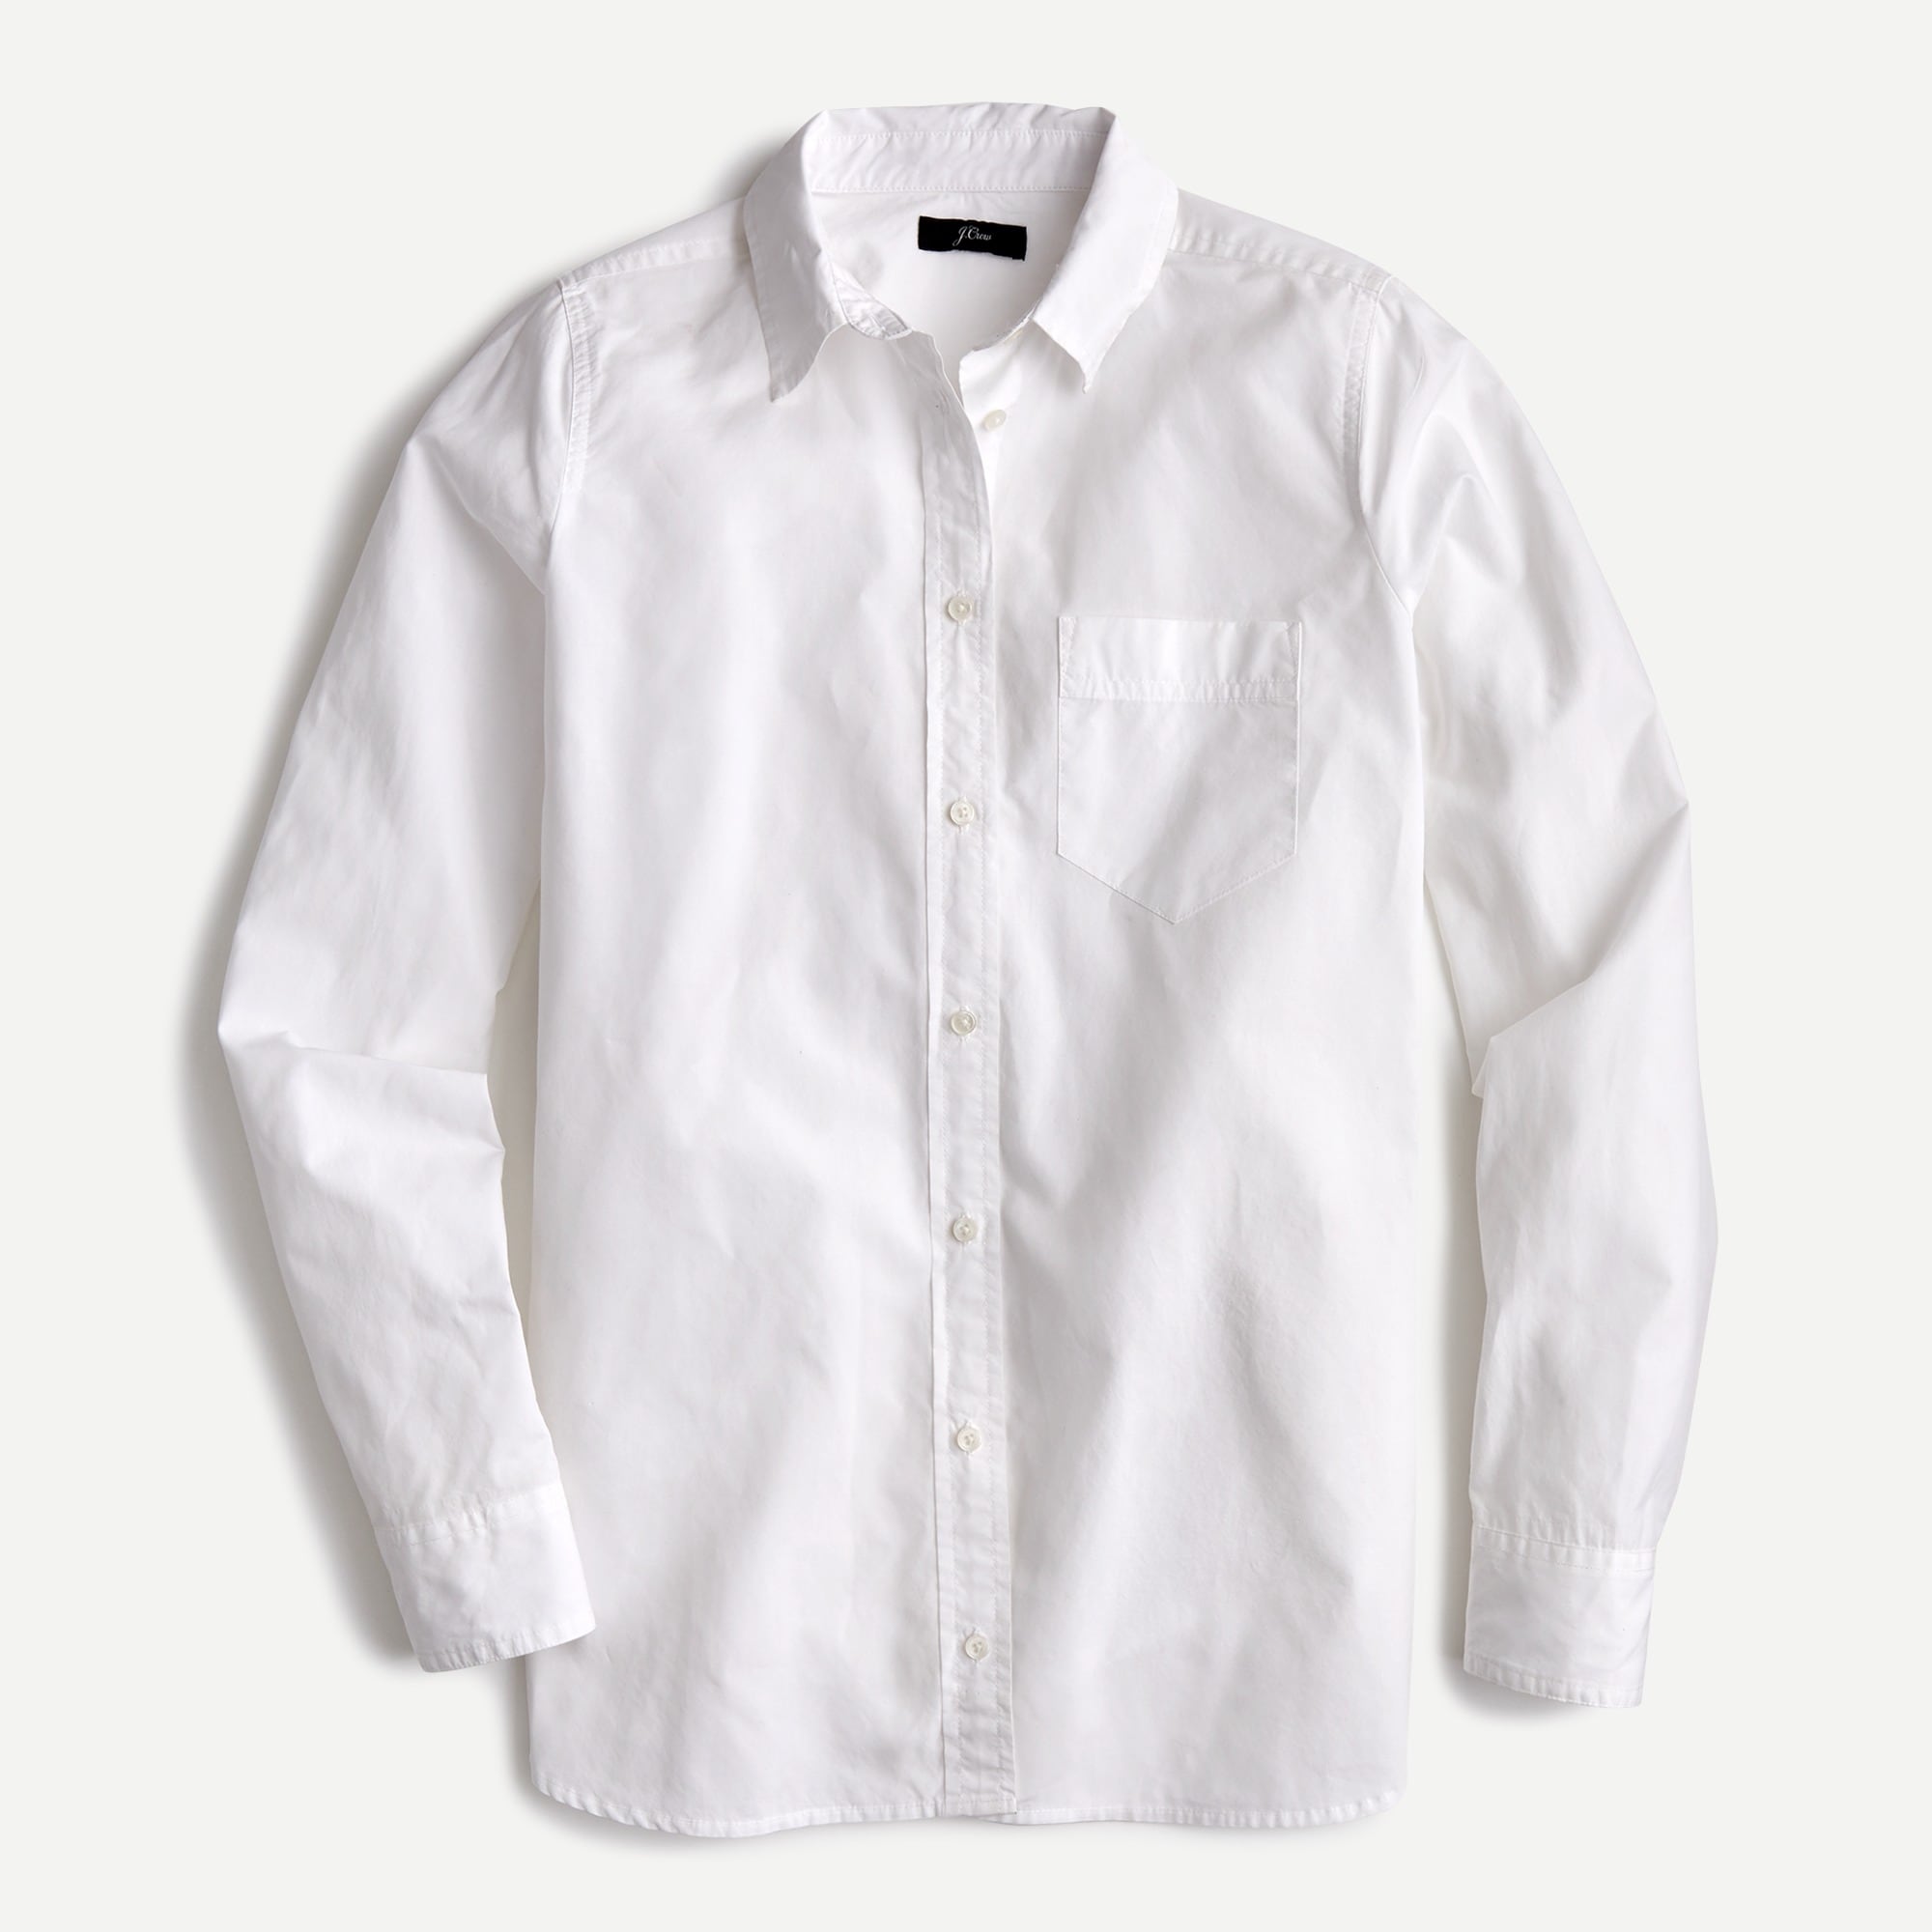 Рубашка с открытым воротом. Рубашка Wiki. White button up Shirt. White Shirt with Jacket. Crystal Cuff button down in Cotton Poplin.